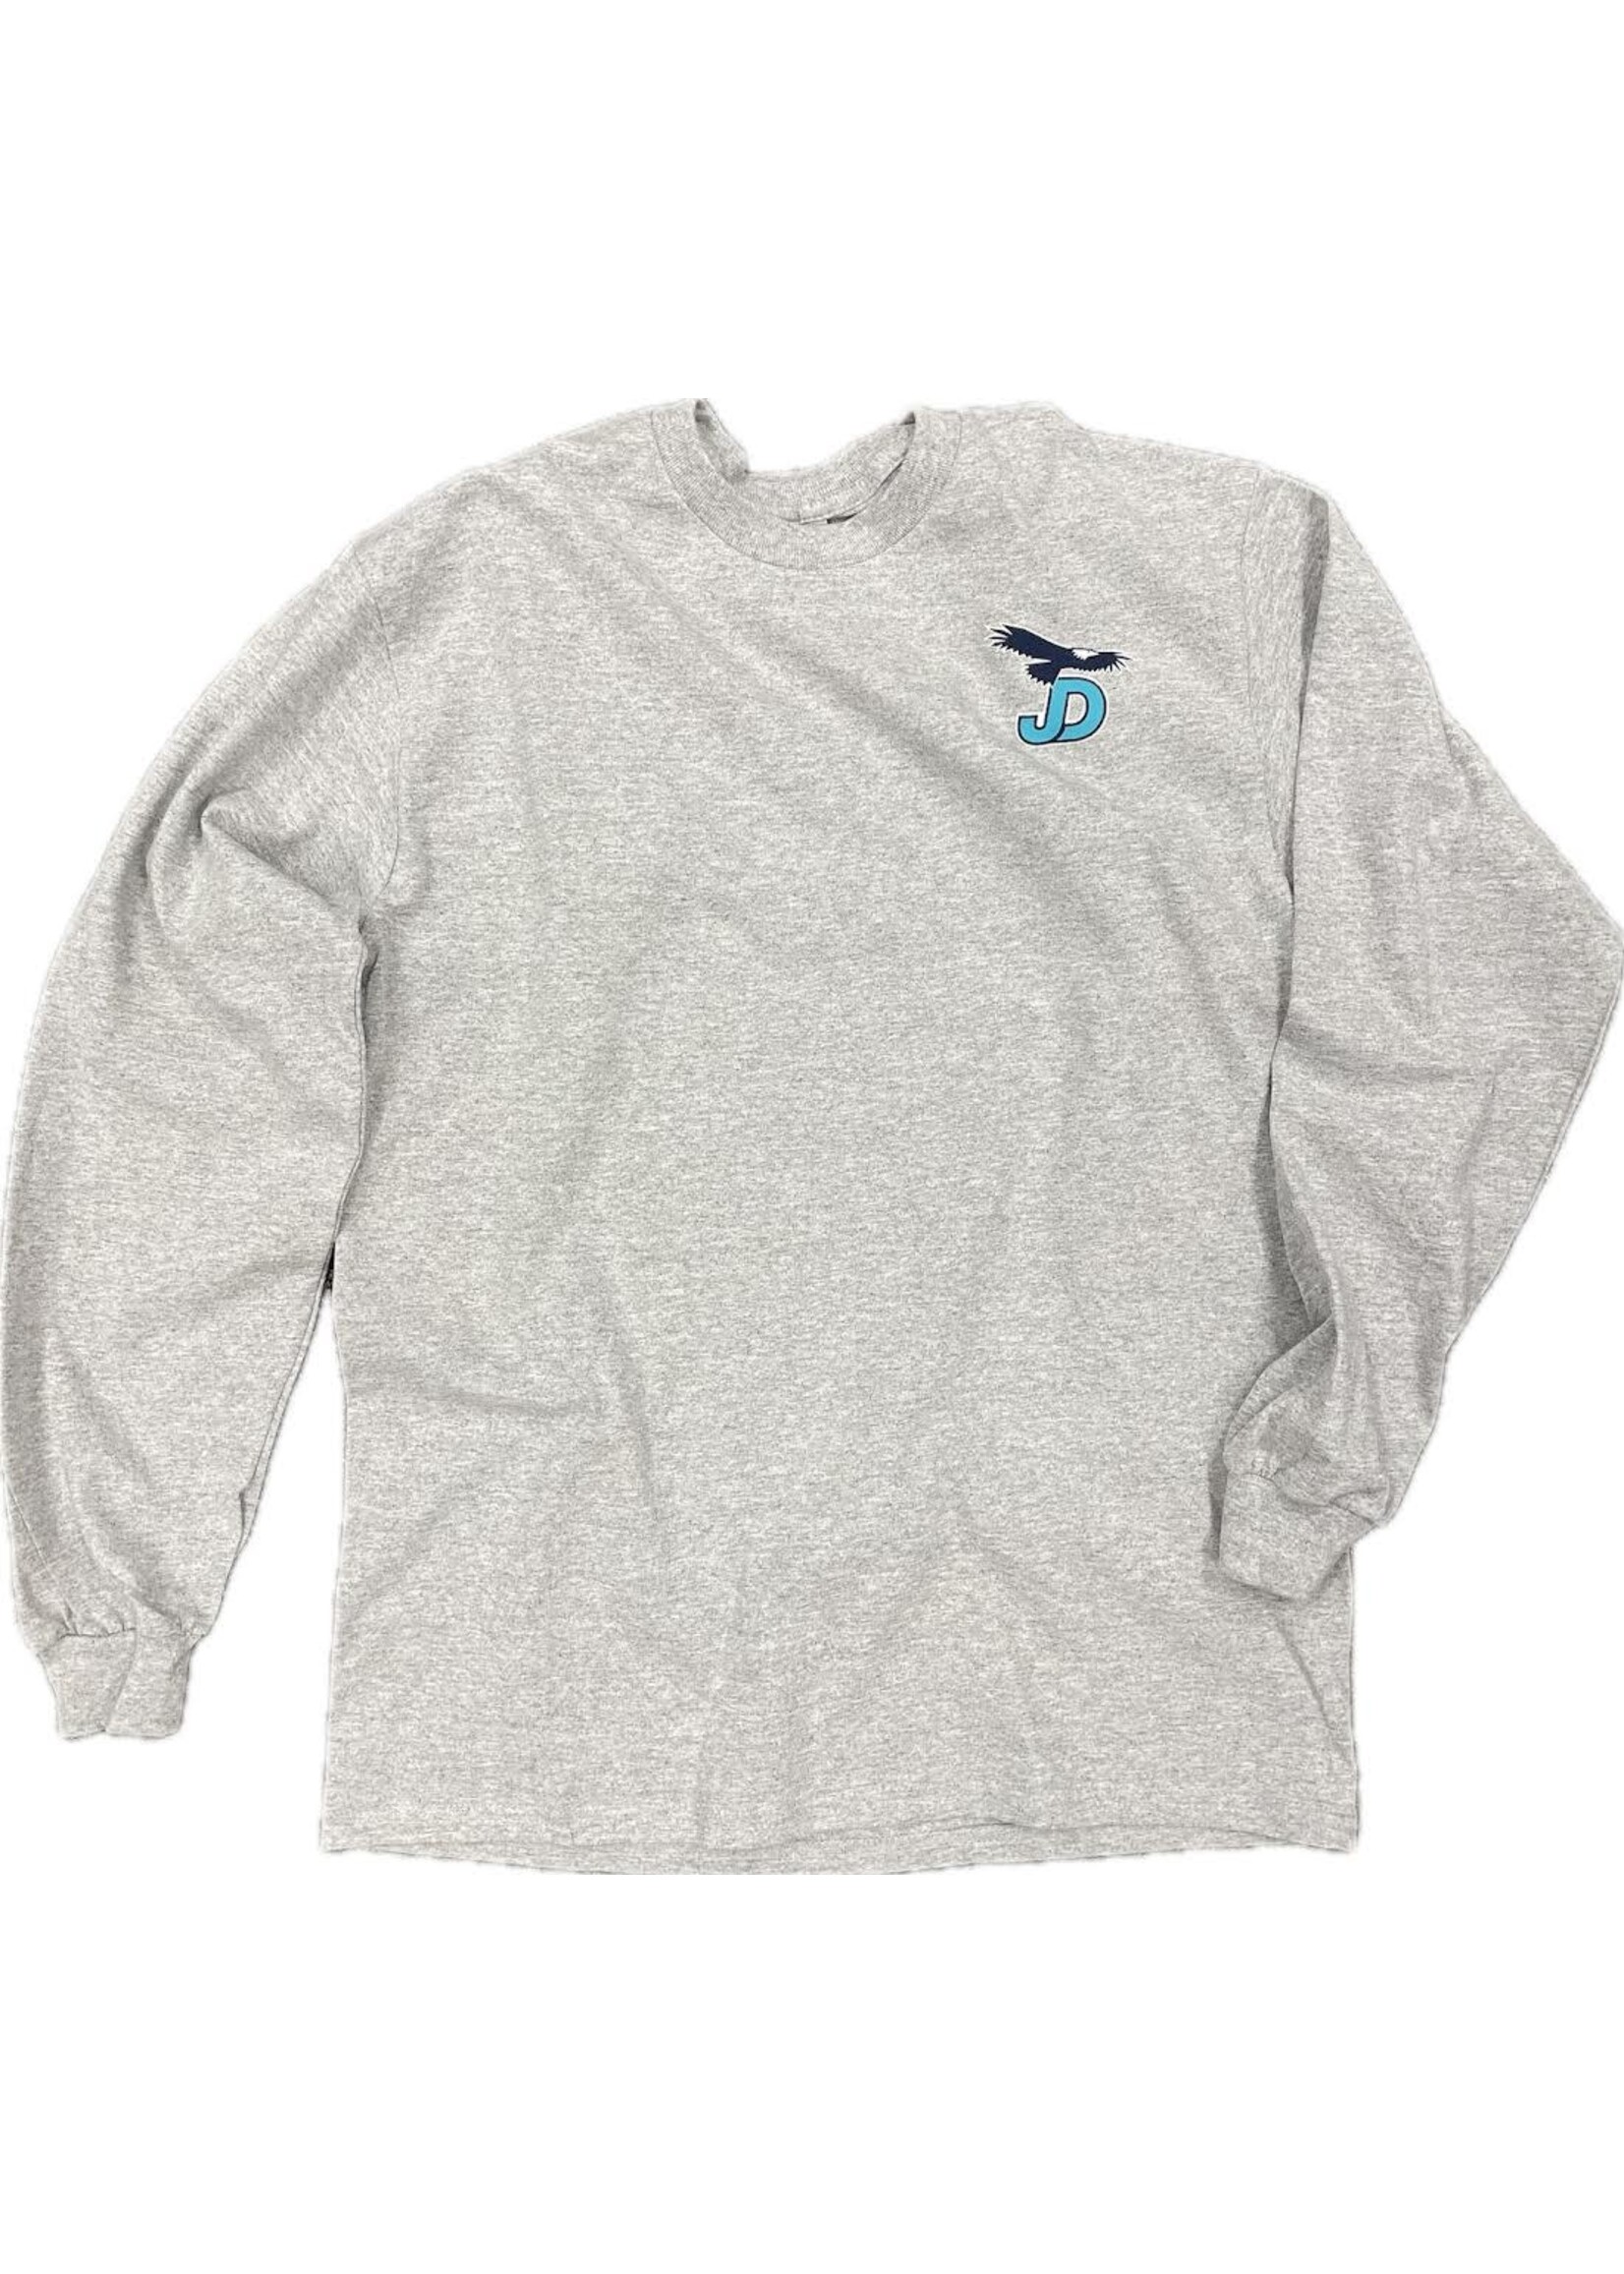 NON-UNIFORM JD /Eagle Long Sleeve Shirt, Unisex